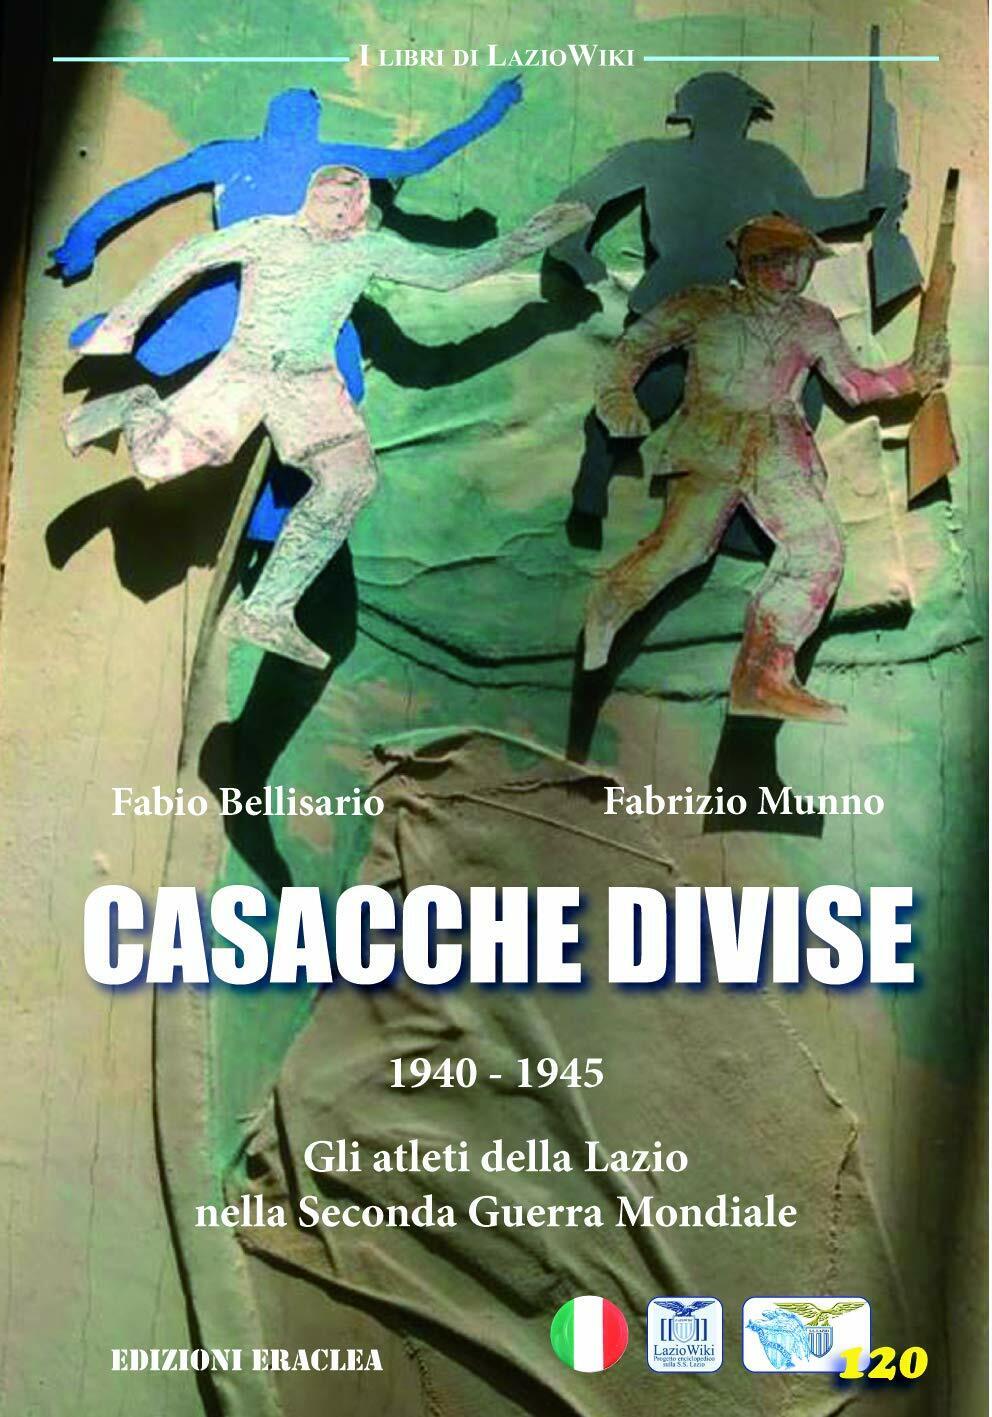 Casacche divise - Fabio Bellisario, Fabrizio Munno - Eraclea, 2020 libro usato